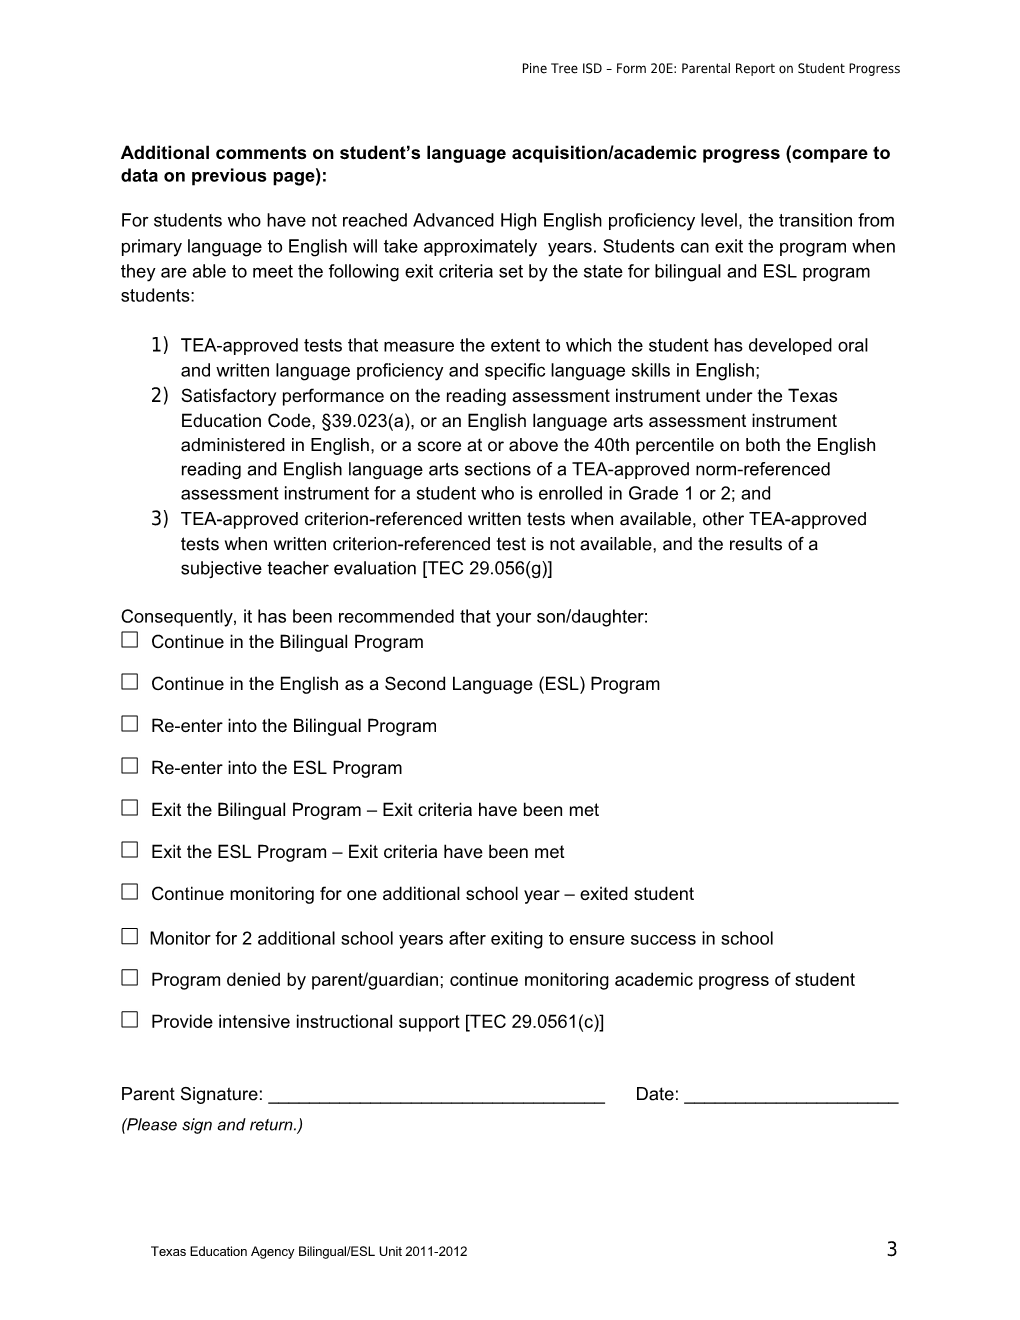 Pine Tree ISD Form 20E: Parental Report on Student Progress